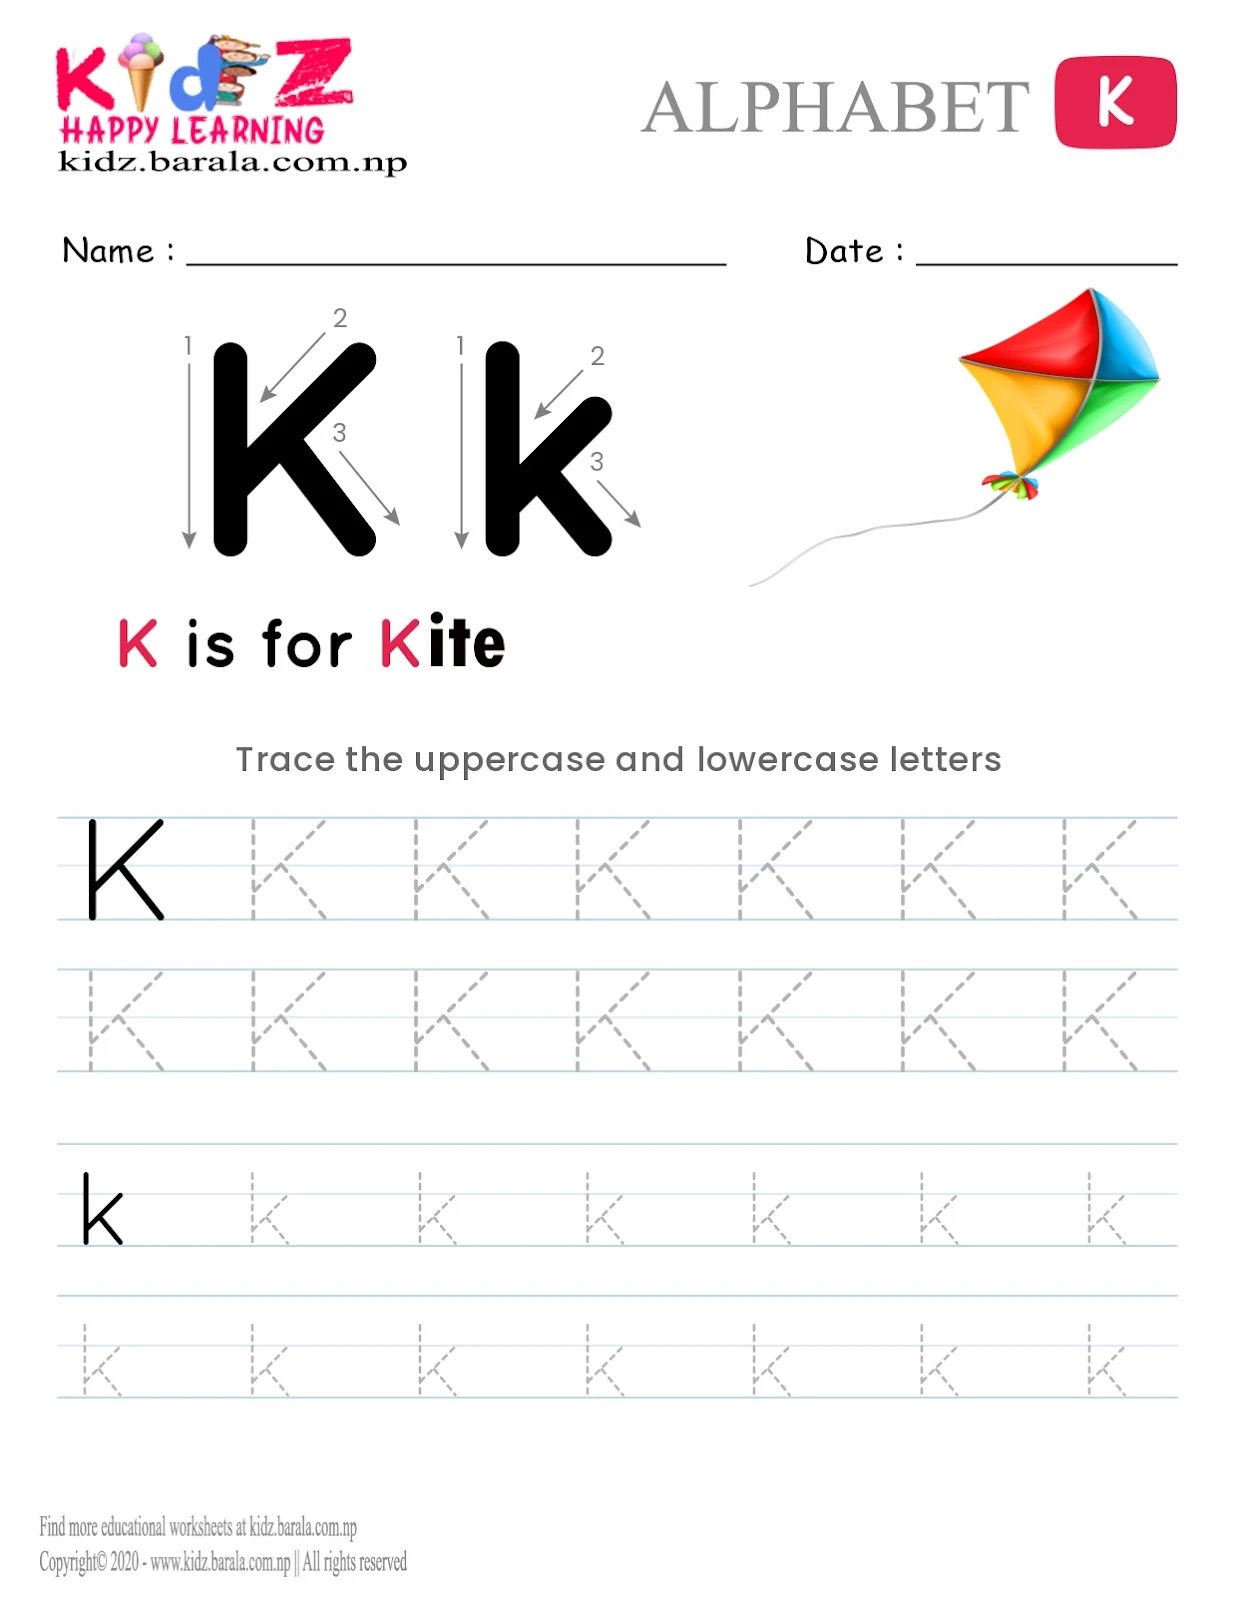 Alphabet k tracing worksheet free download .pdf